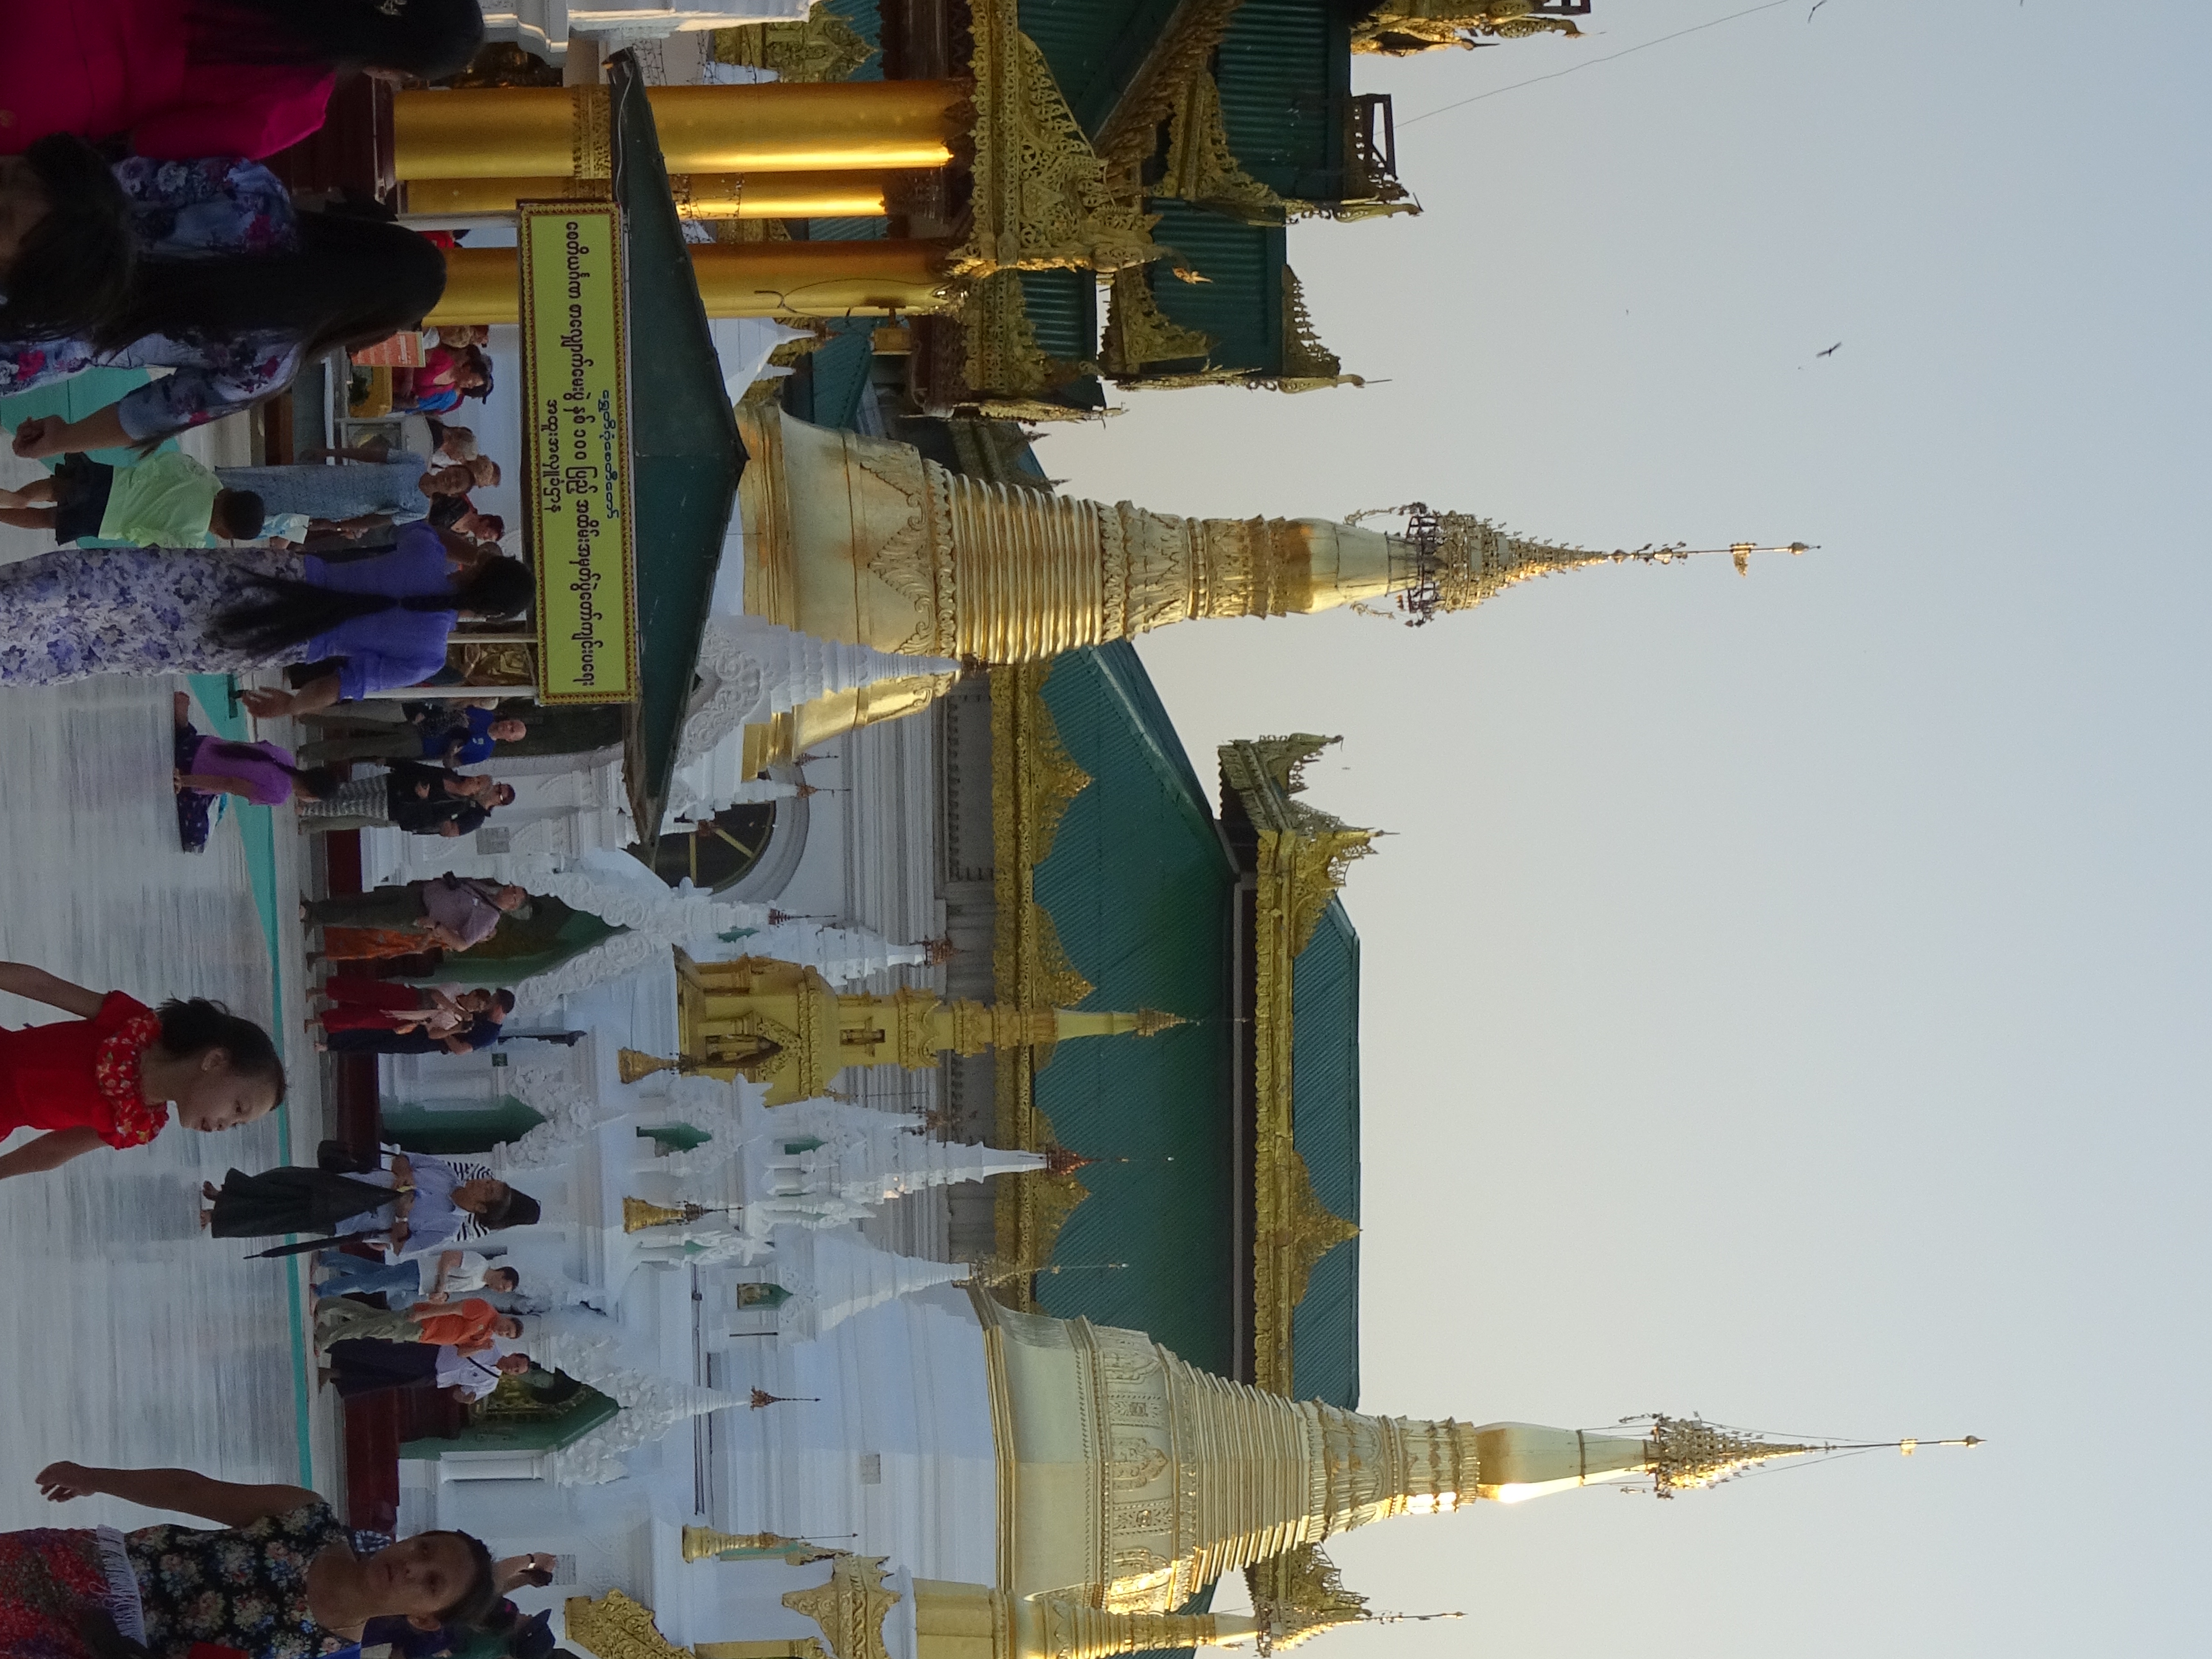 A “glimpse” on the visit of Sr. Rosilla and Sr. Antonella in Myanmar